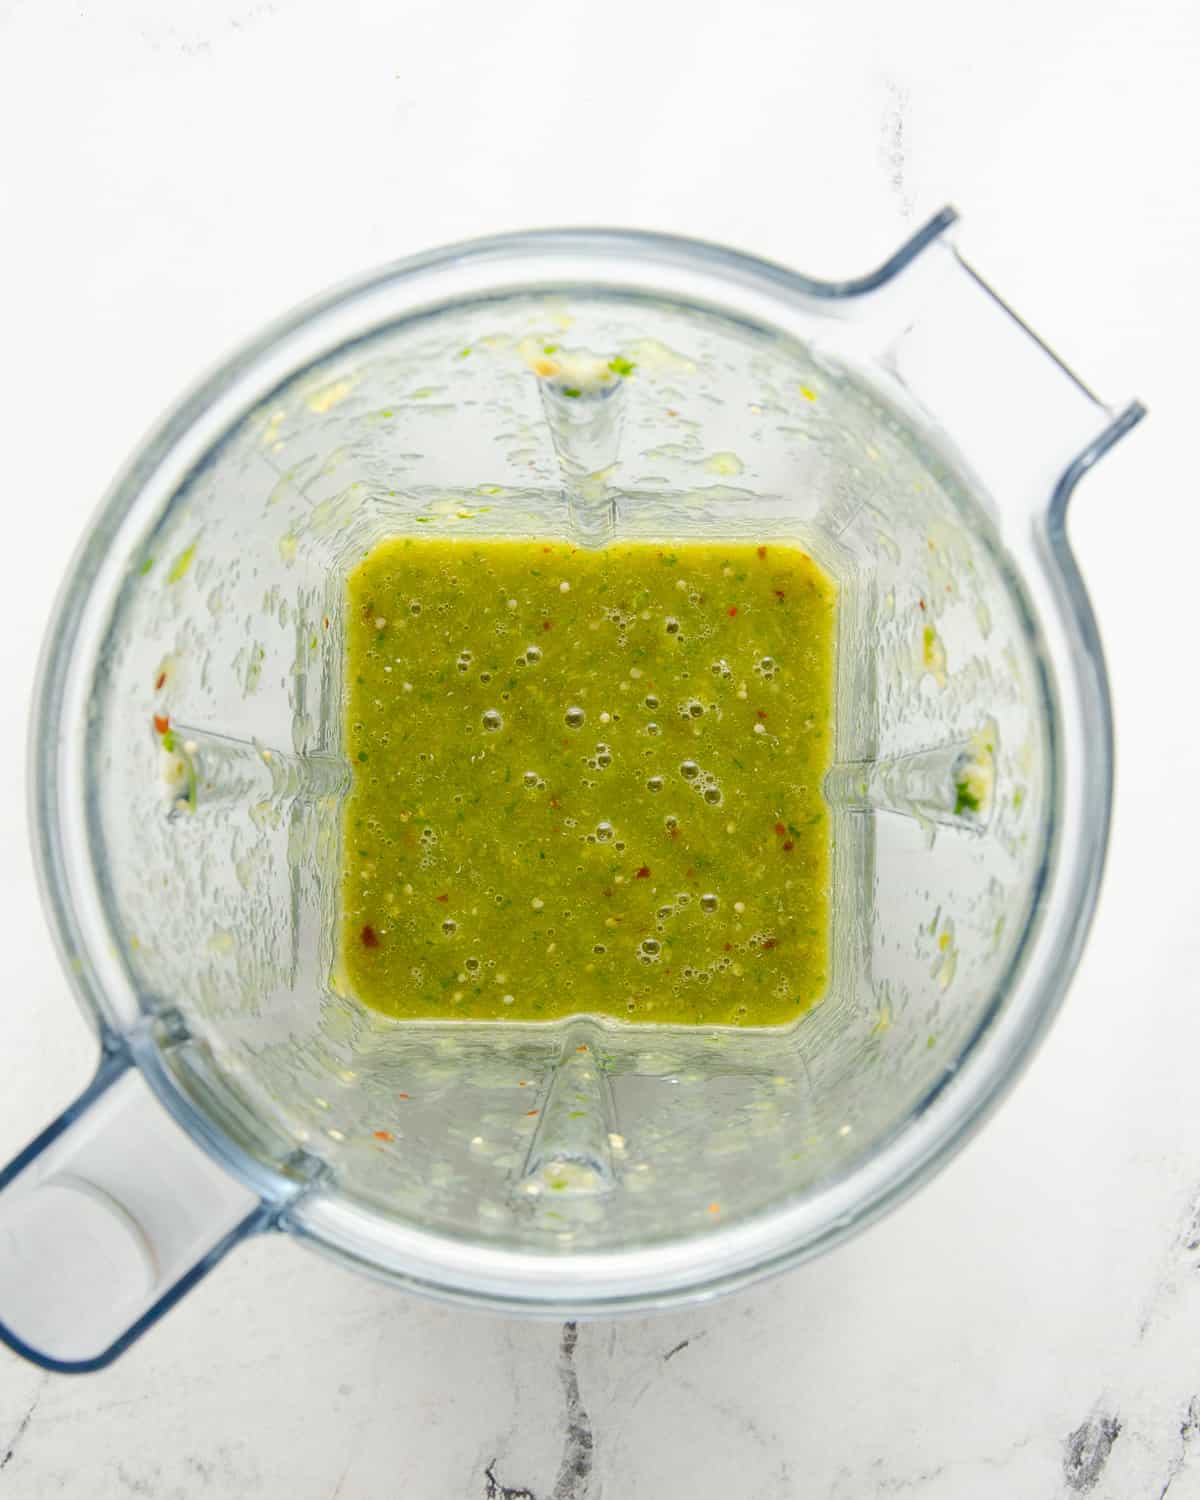 A blended green serrano salsa in the blender.